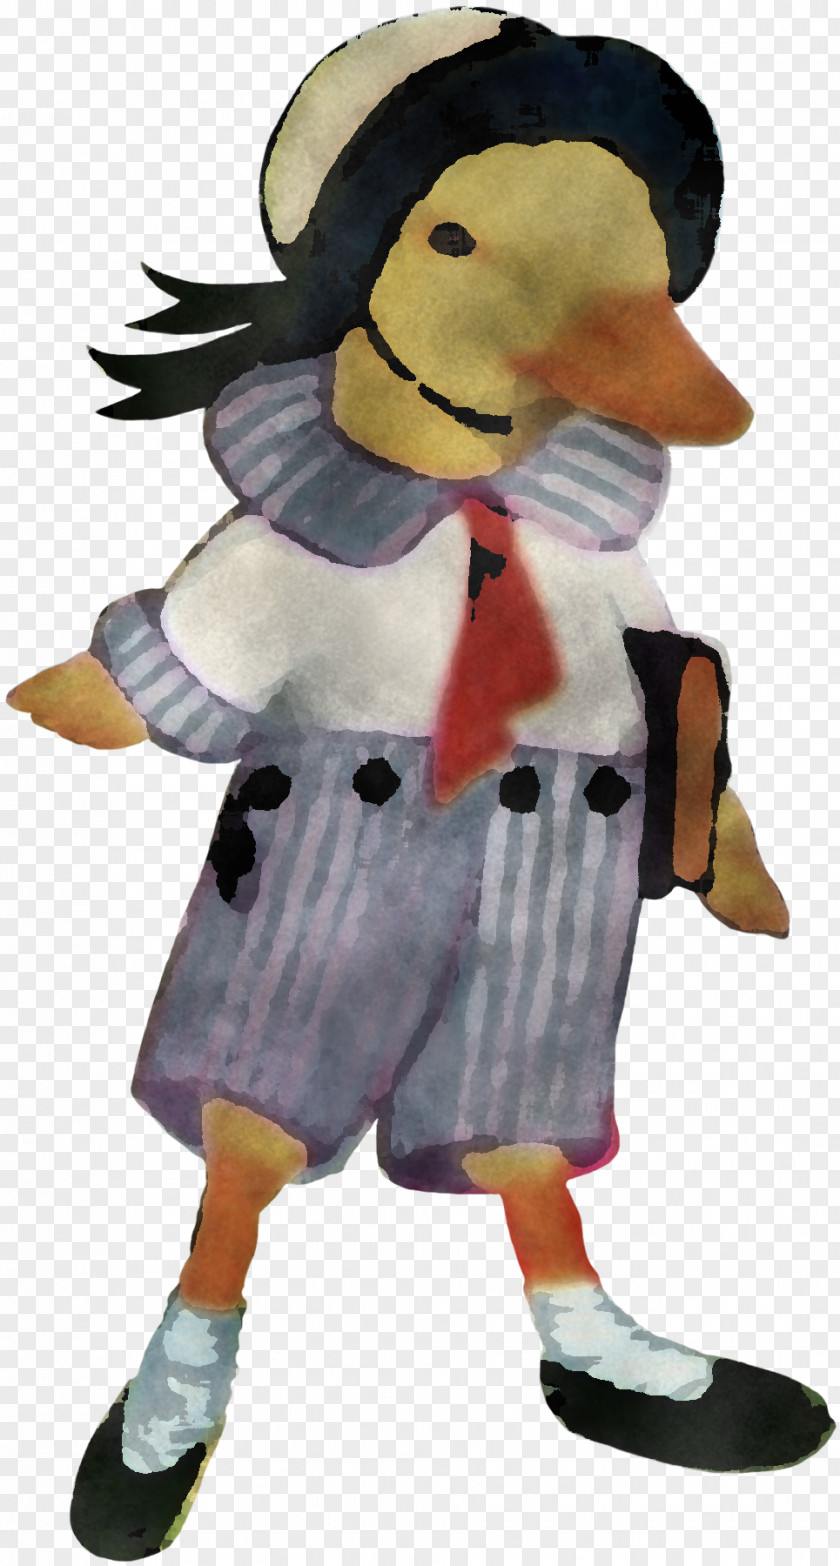 Cartoon Mascot Toy Duck Stuffed PNG